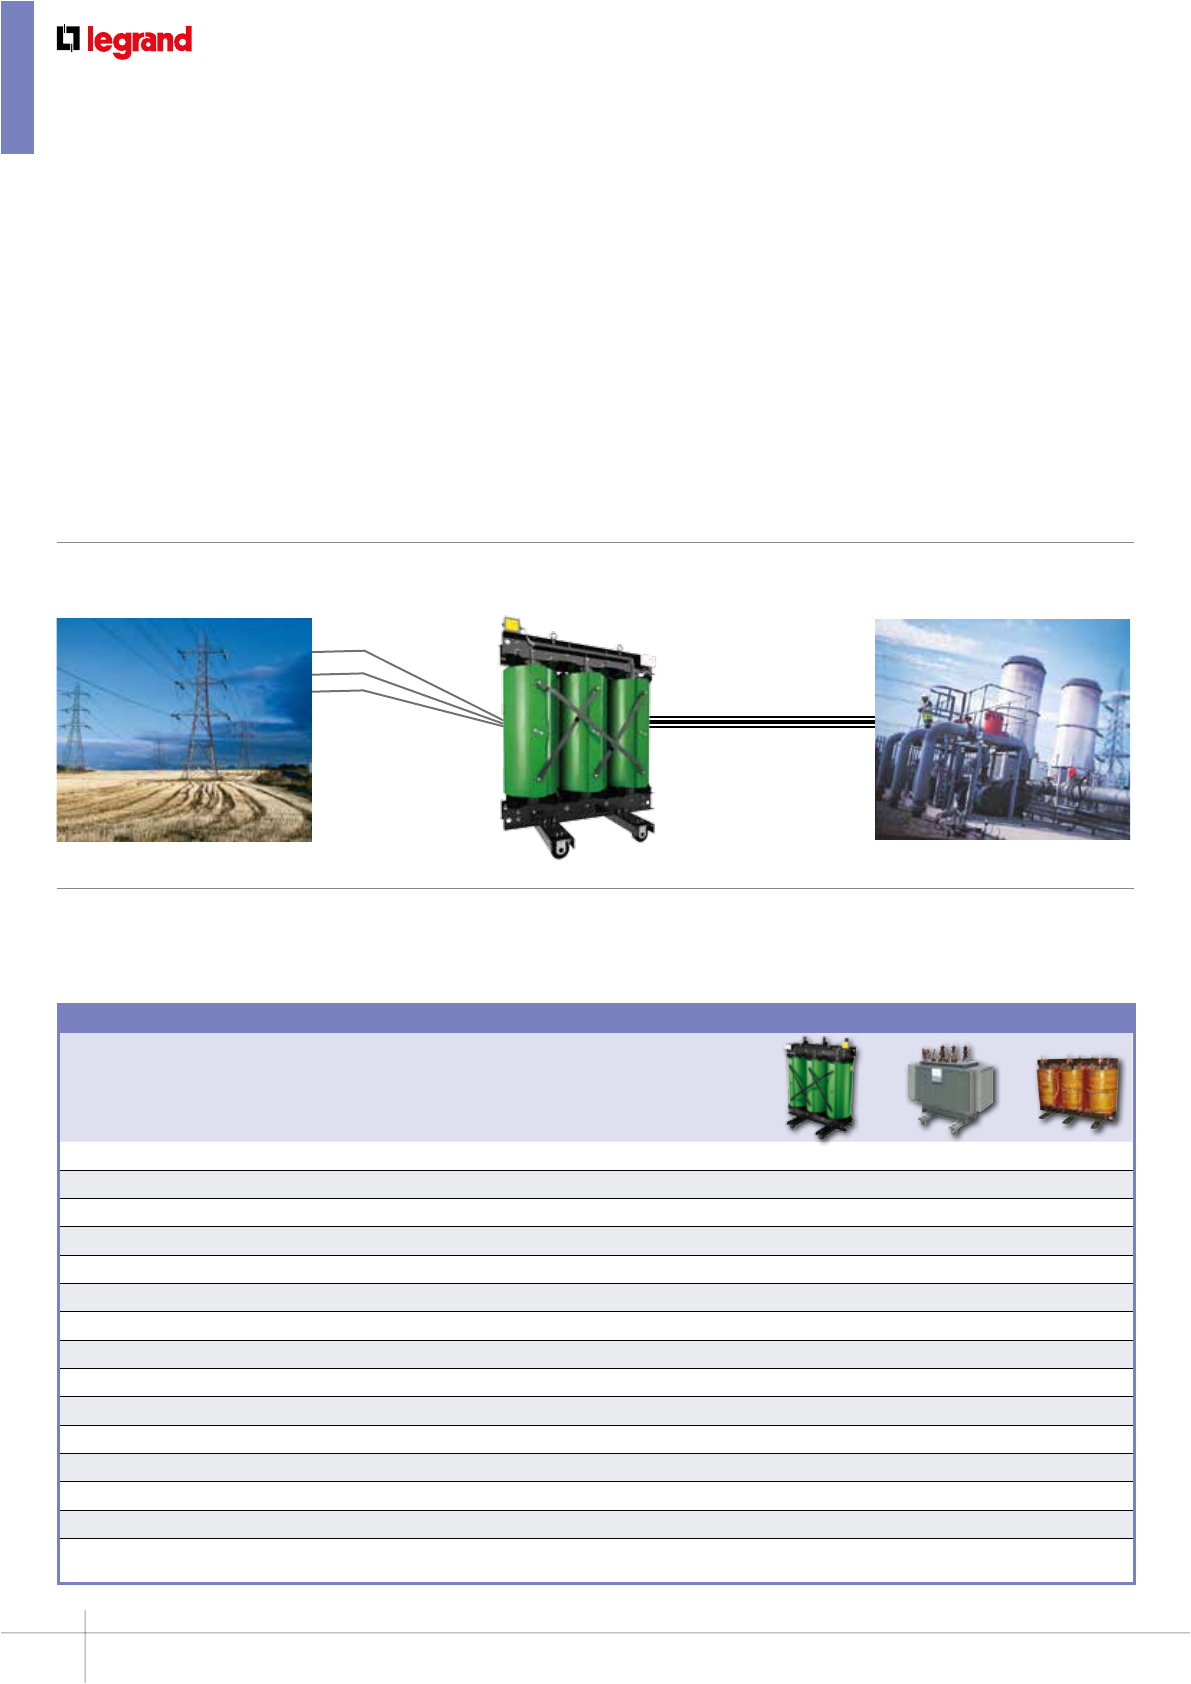 wiring diagram for legrand transformer